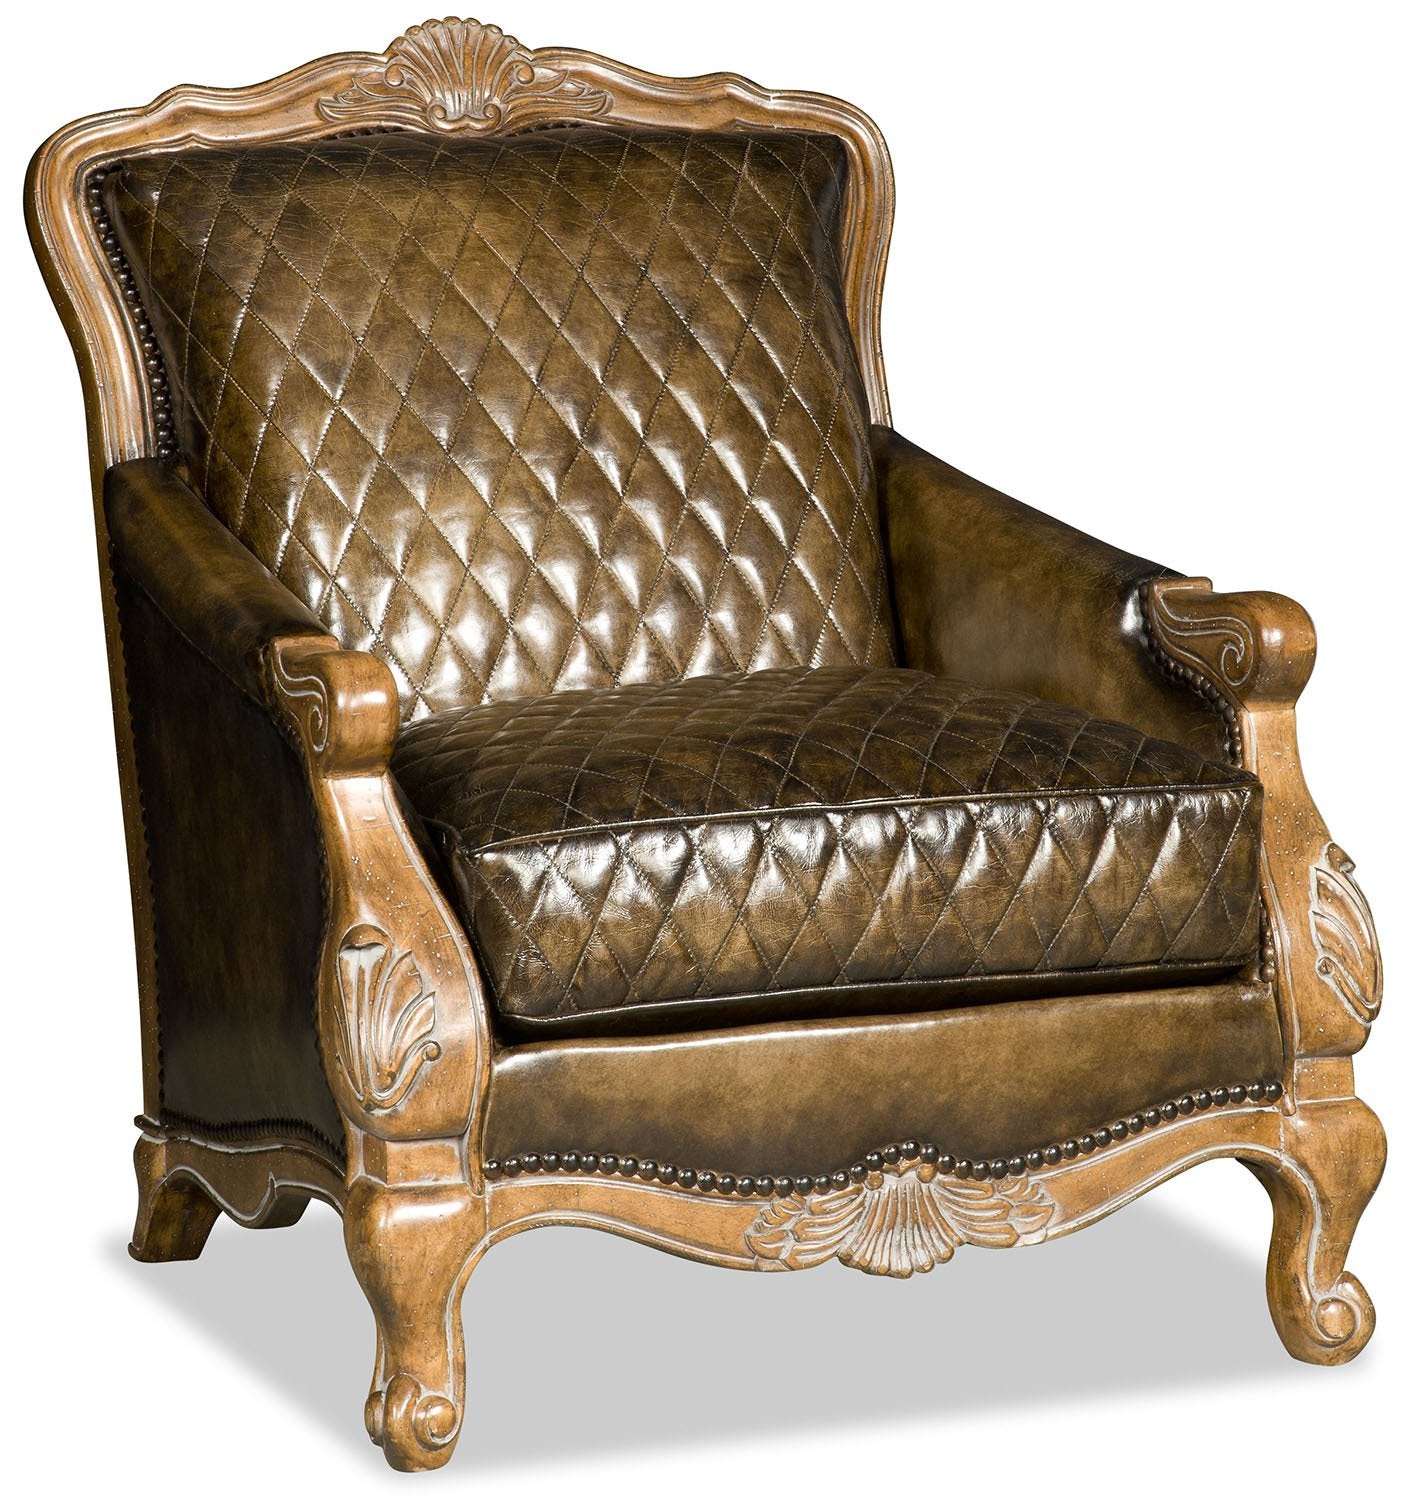 Buckley Chair in Antique Walnut